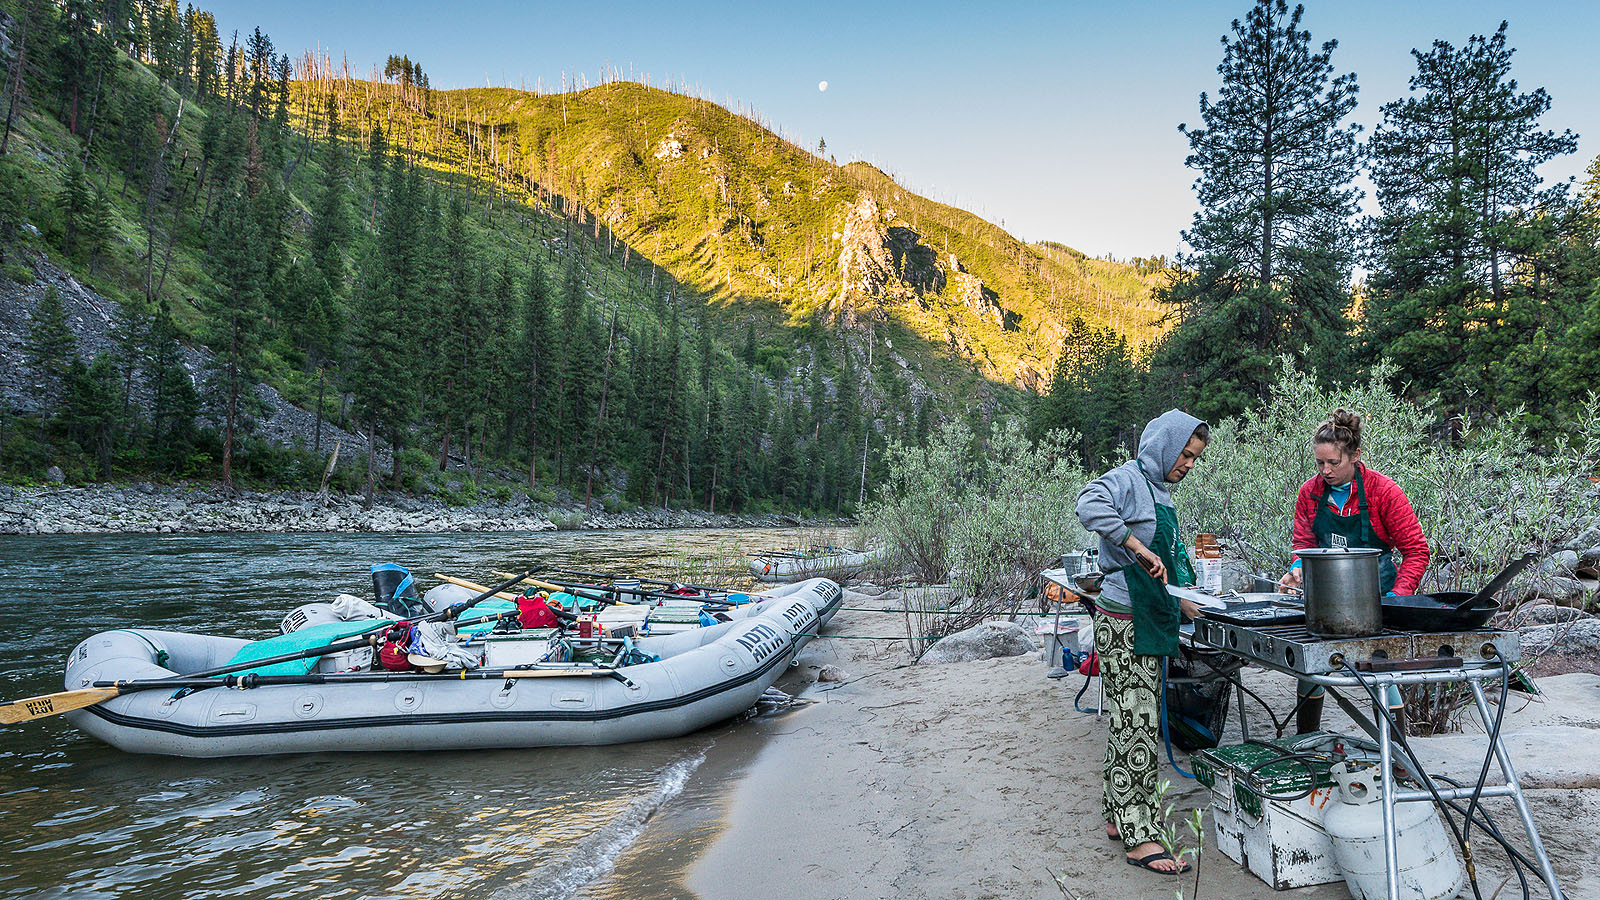 Camping along the banks of the Main Salmon River in Idaho